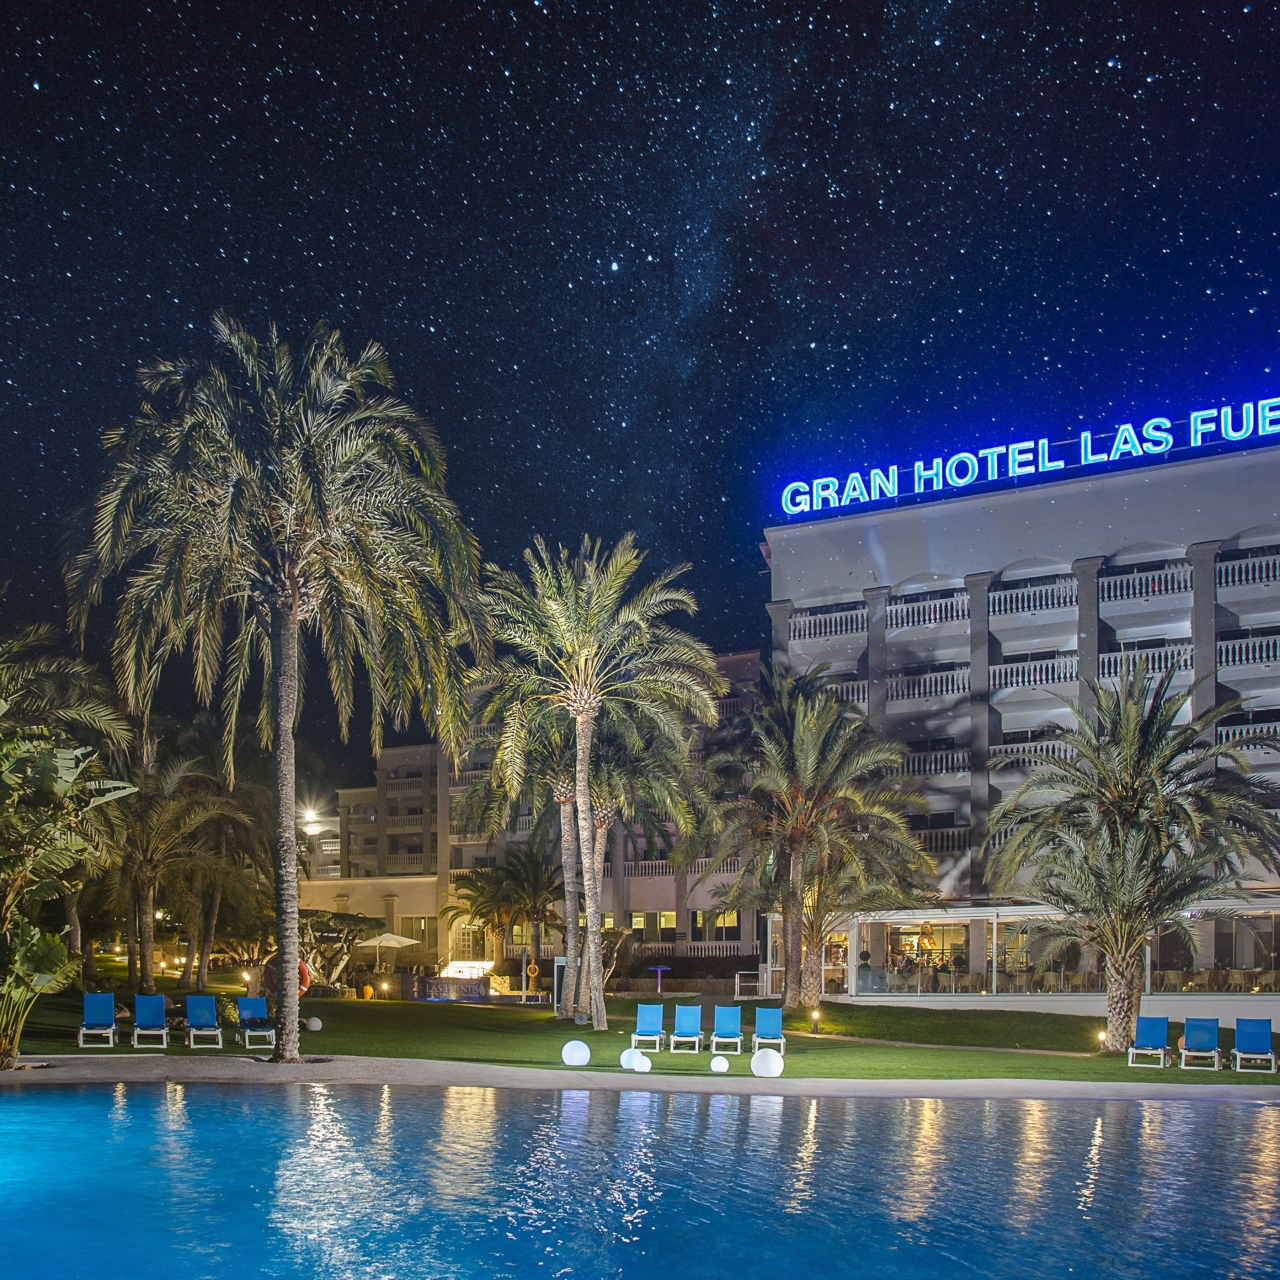 Gran Hotel Las Fuentes - 4 HRS star hotel in Alcossebre, Alcalà de Xivert  (Valencia)